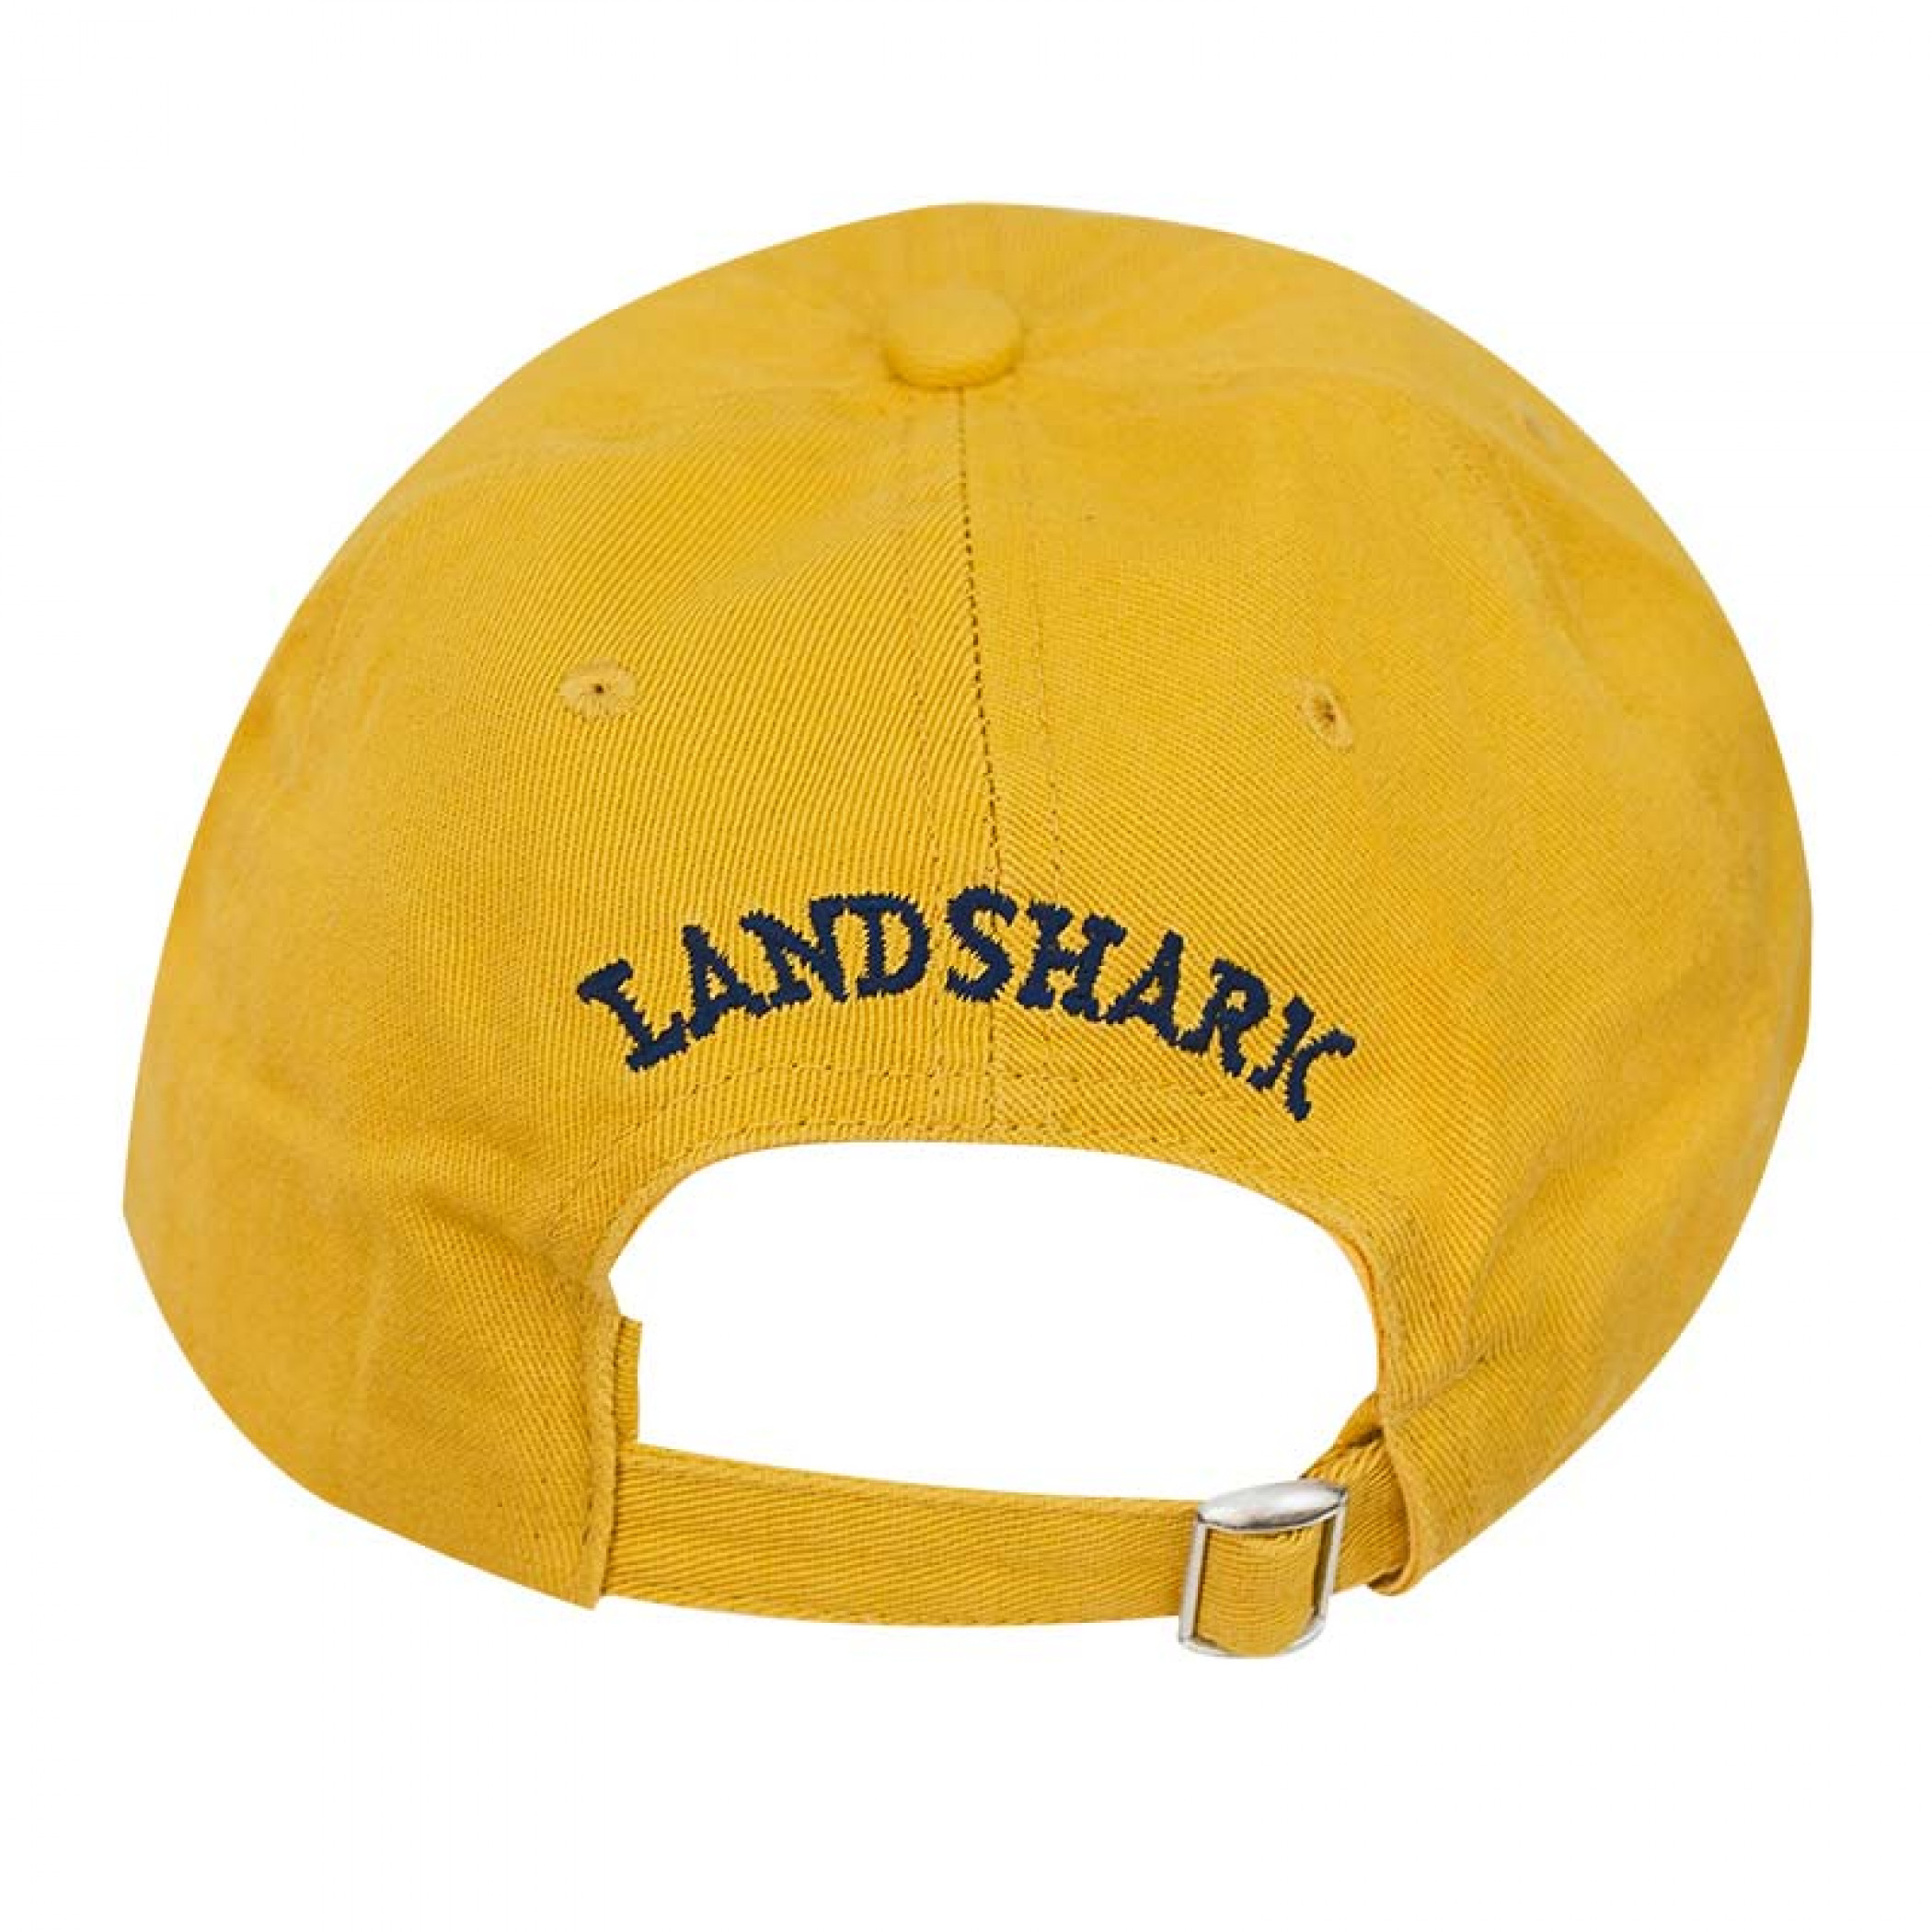 Landshark Adjustable Yellow Hat